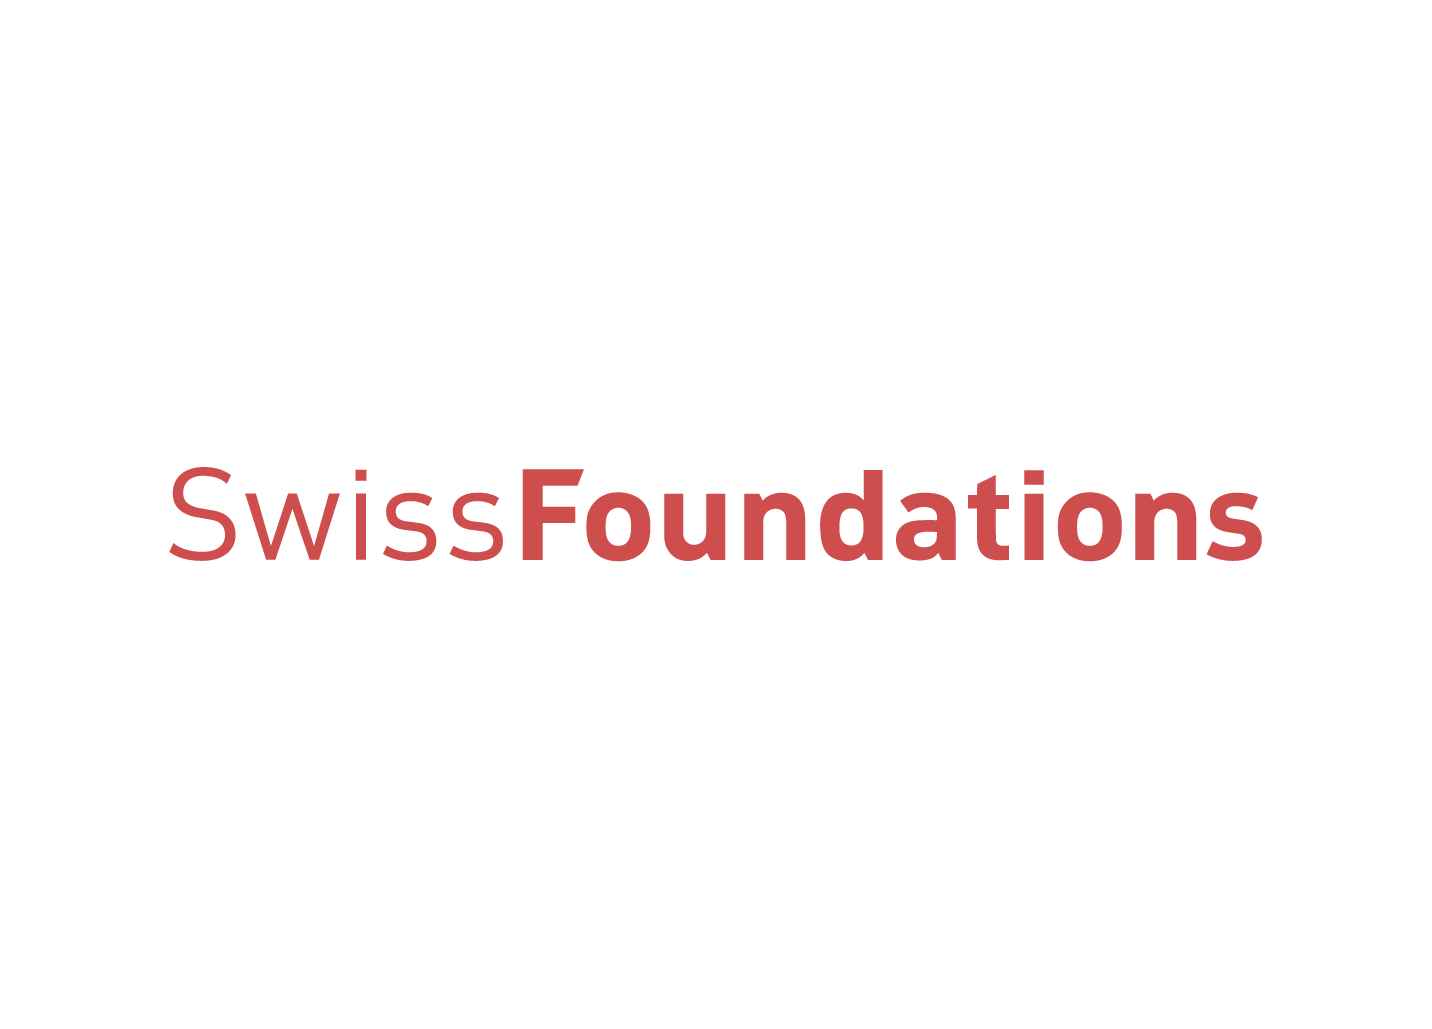 SwissFoundations / StiftungsratsMandat.com